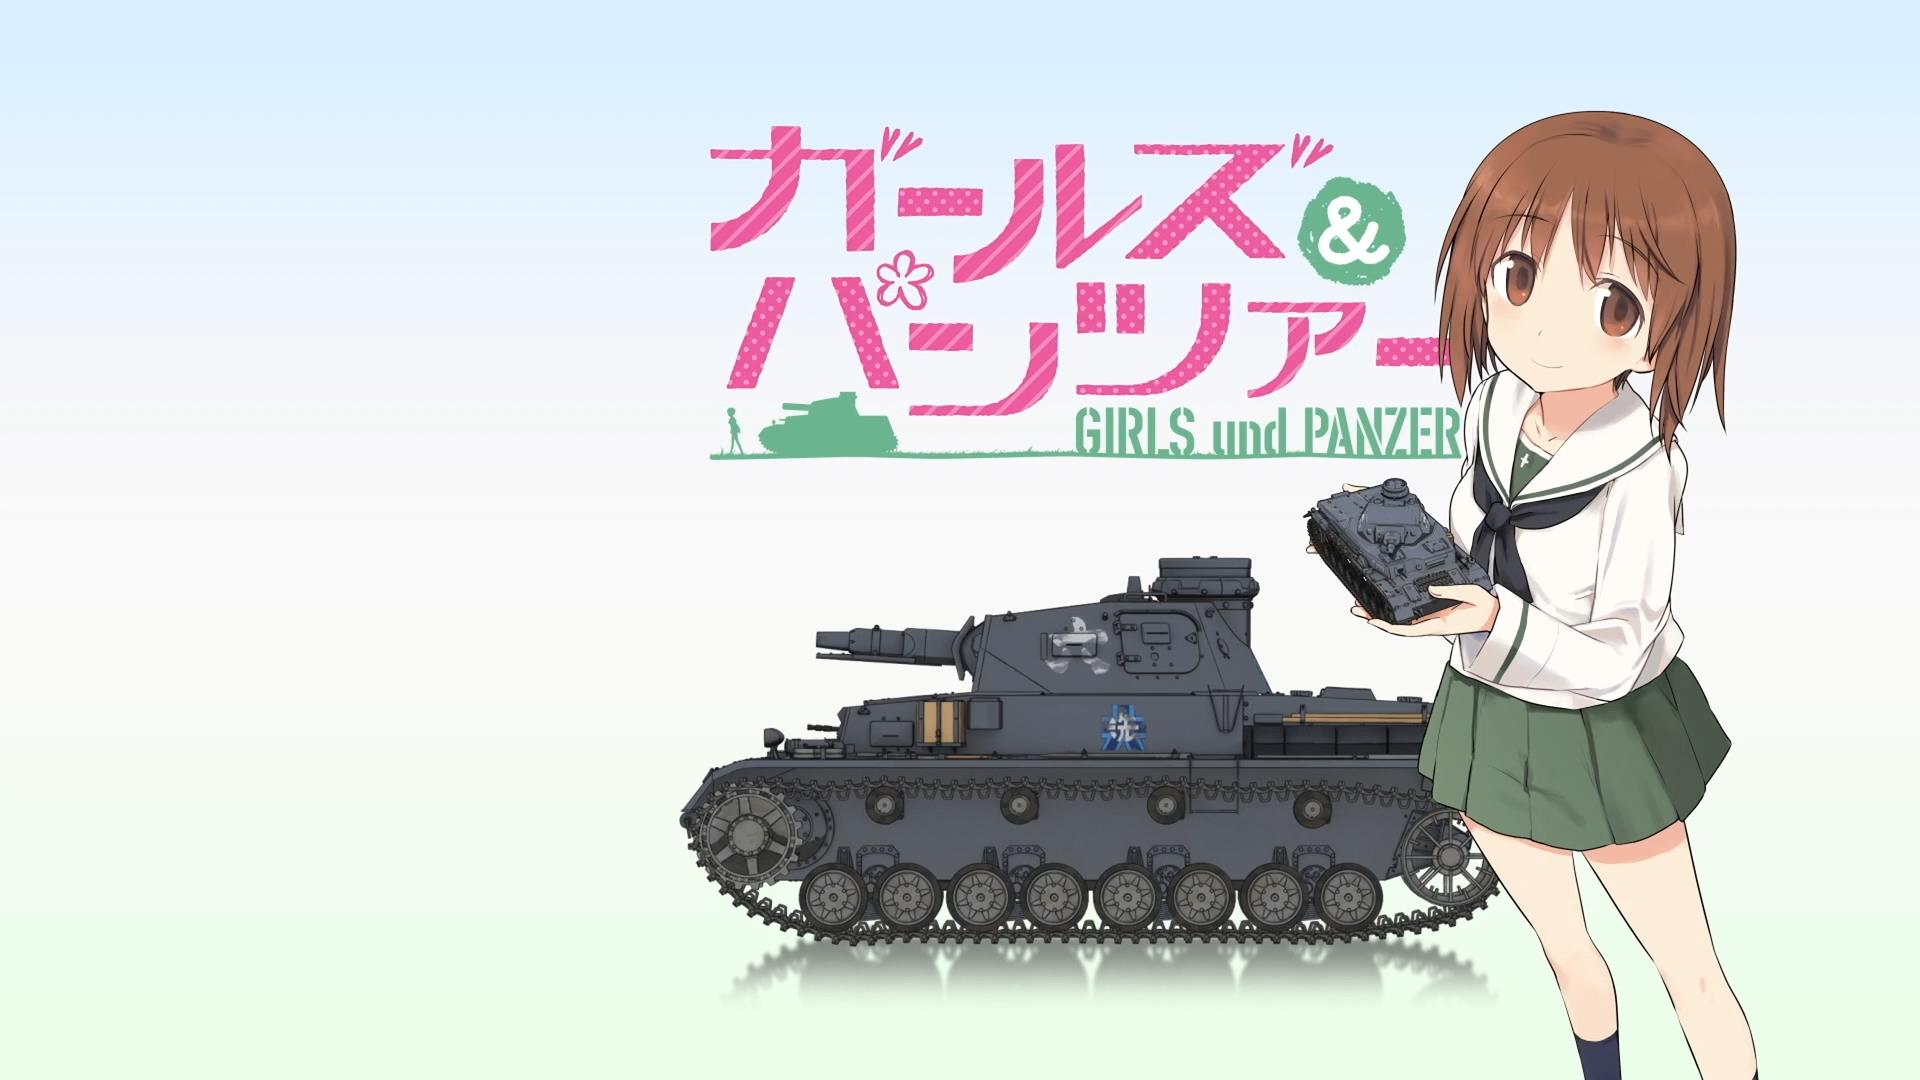 Anime 1920x1080 Girls und Panzer anime girls tank white background Japanese minimalism simple background school uniform schoolgirl looking at viewer smiling brunette brown eyes reflection